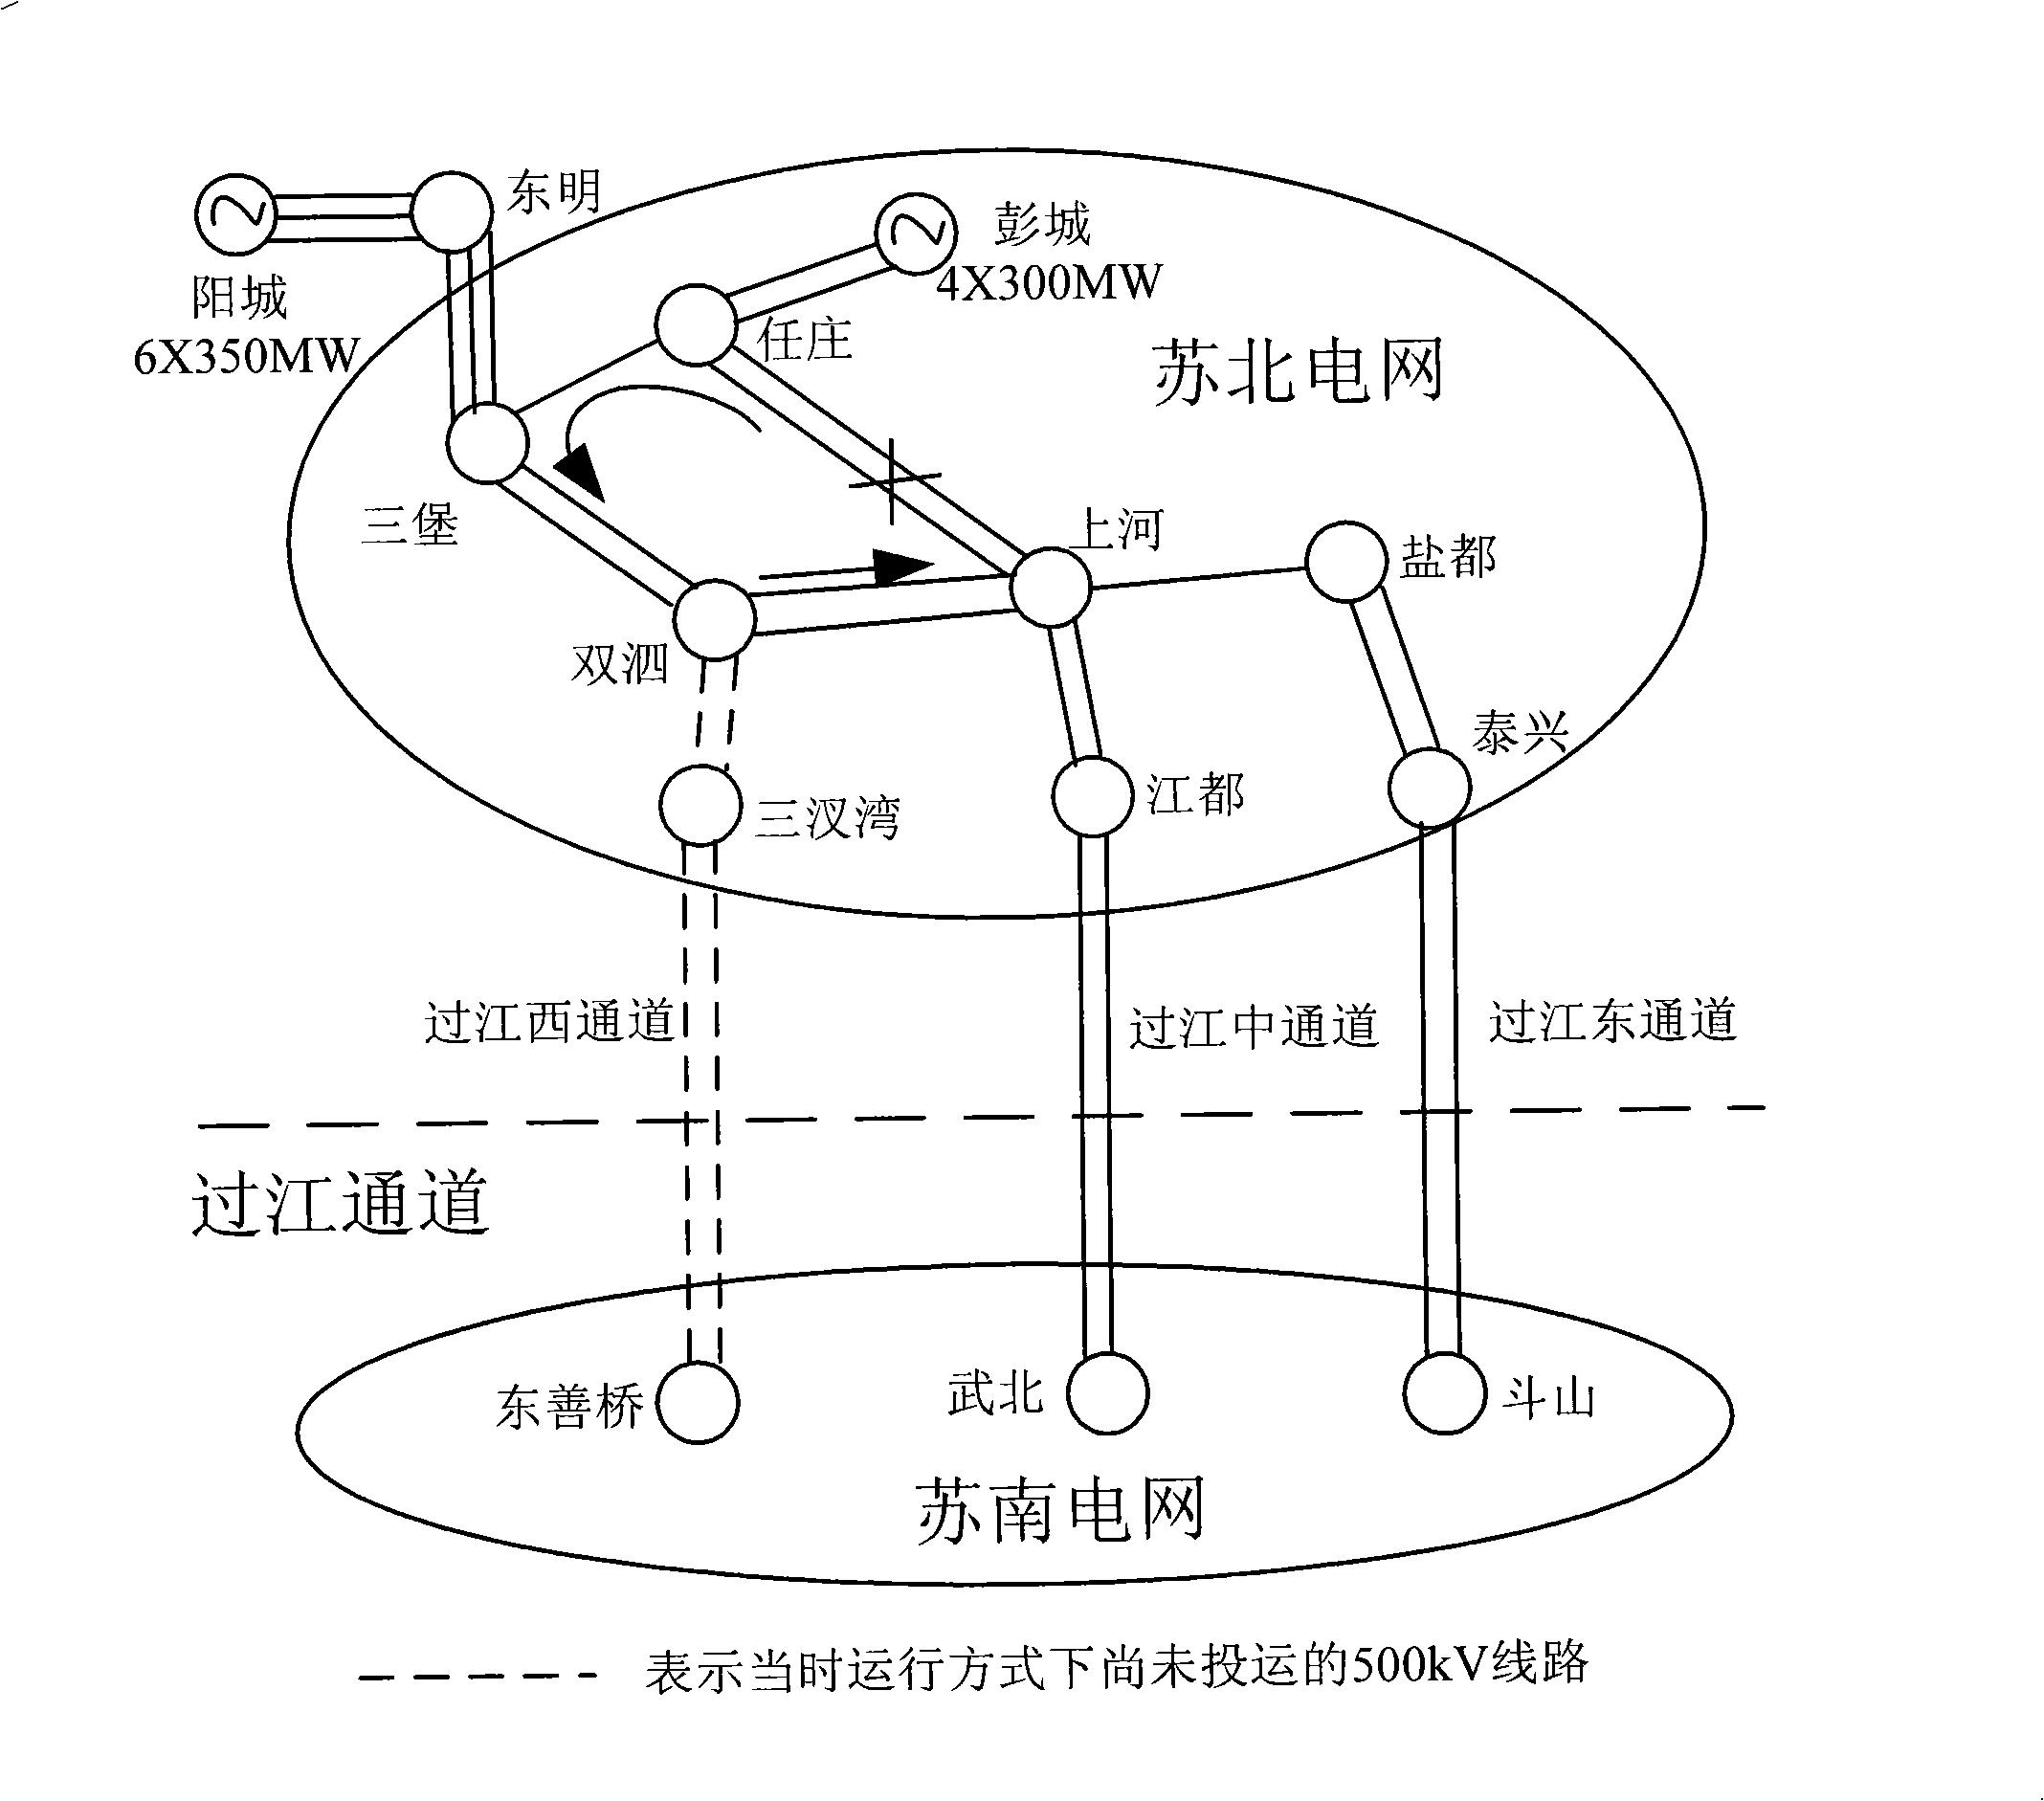 Closed-loop self-adaption emergency control method for large electric network í«í«(í«centralized coordination, demixing controlí») í»í»